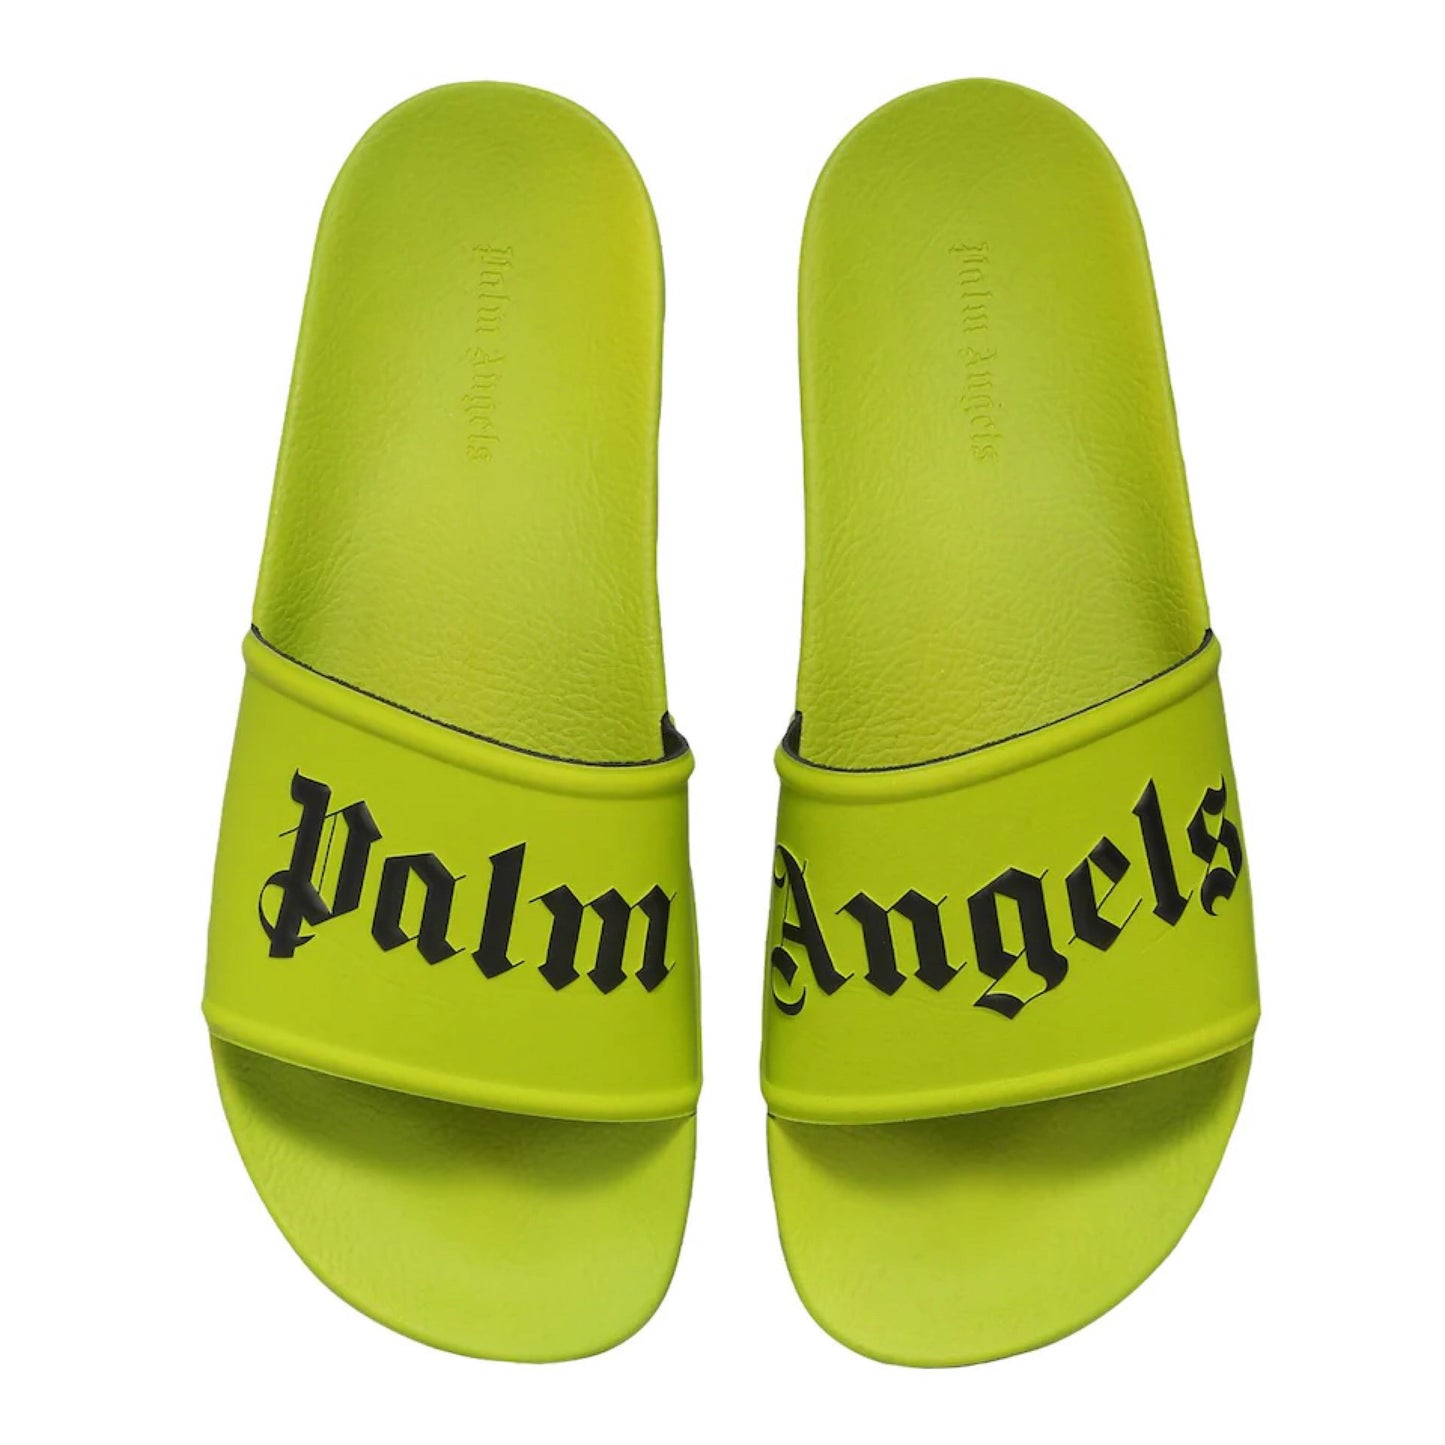 Palm Angels Neon Sliders Sliders Palm Angels 